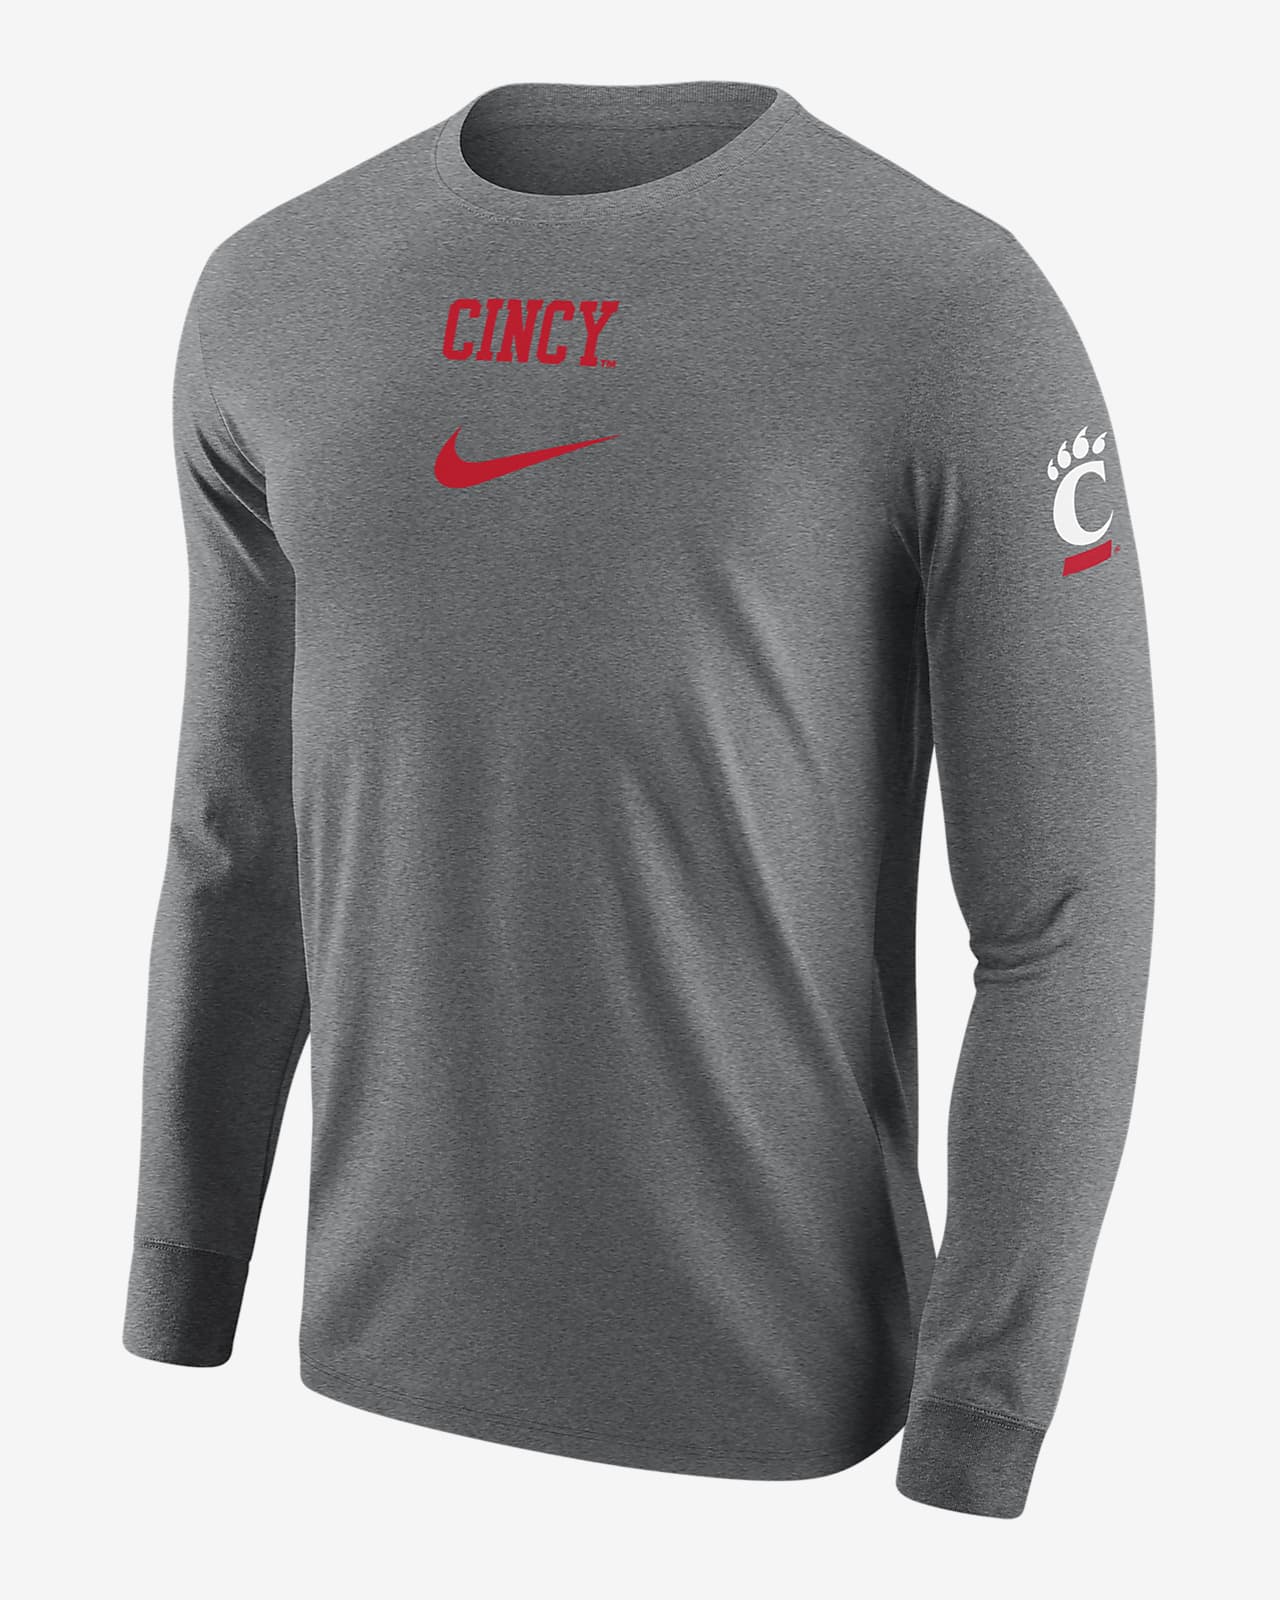 Cincinnati Men's Nike College Long-Sleeve T-Shirt